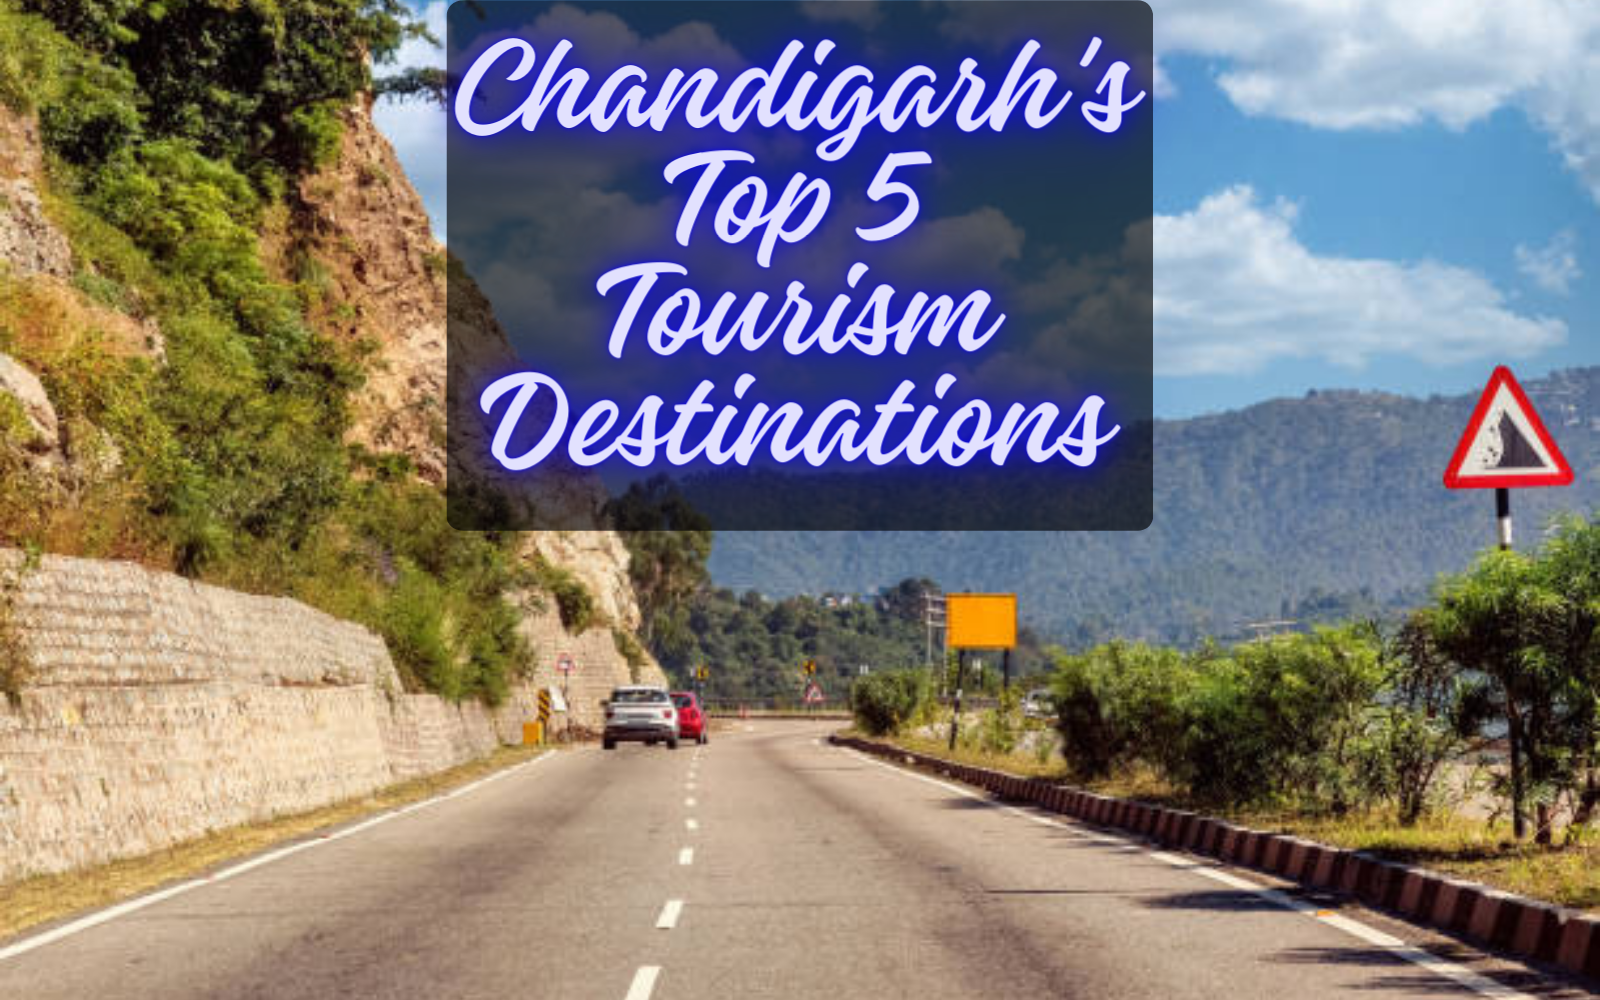 Chandigarh's Top 5 Tourism Destinations